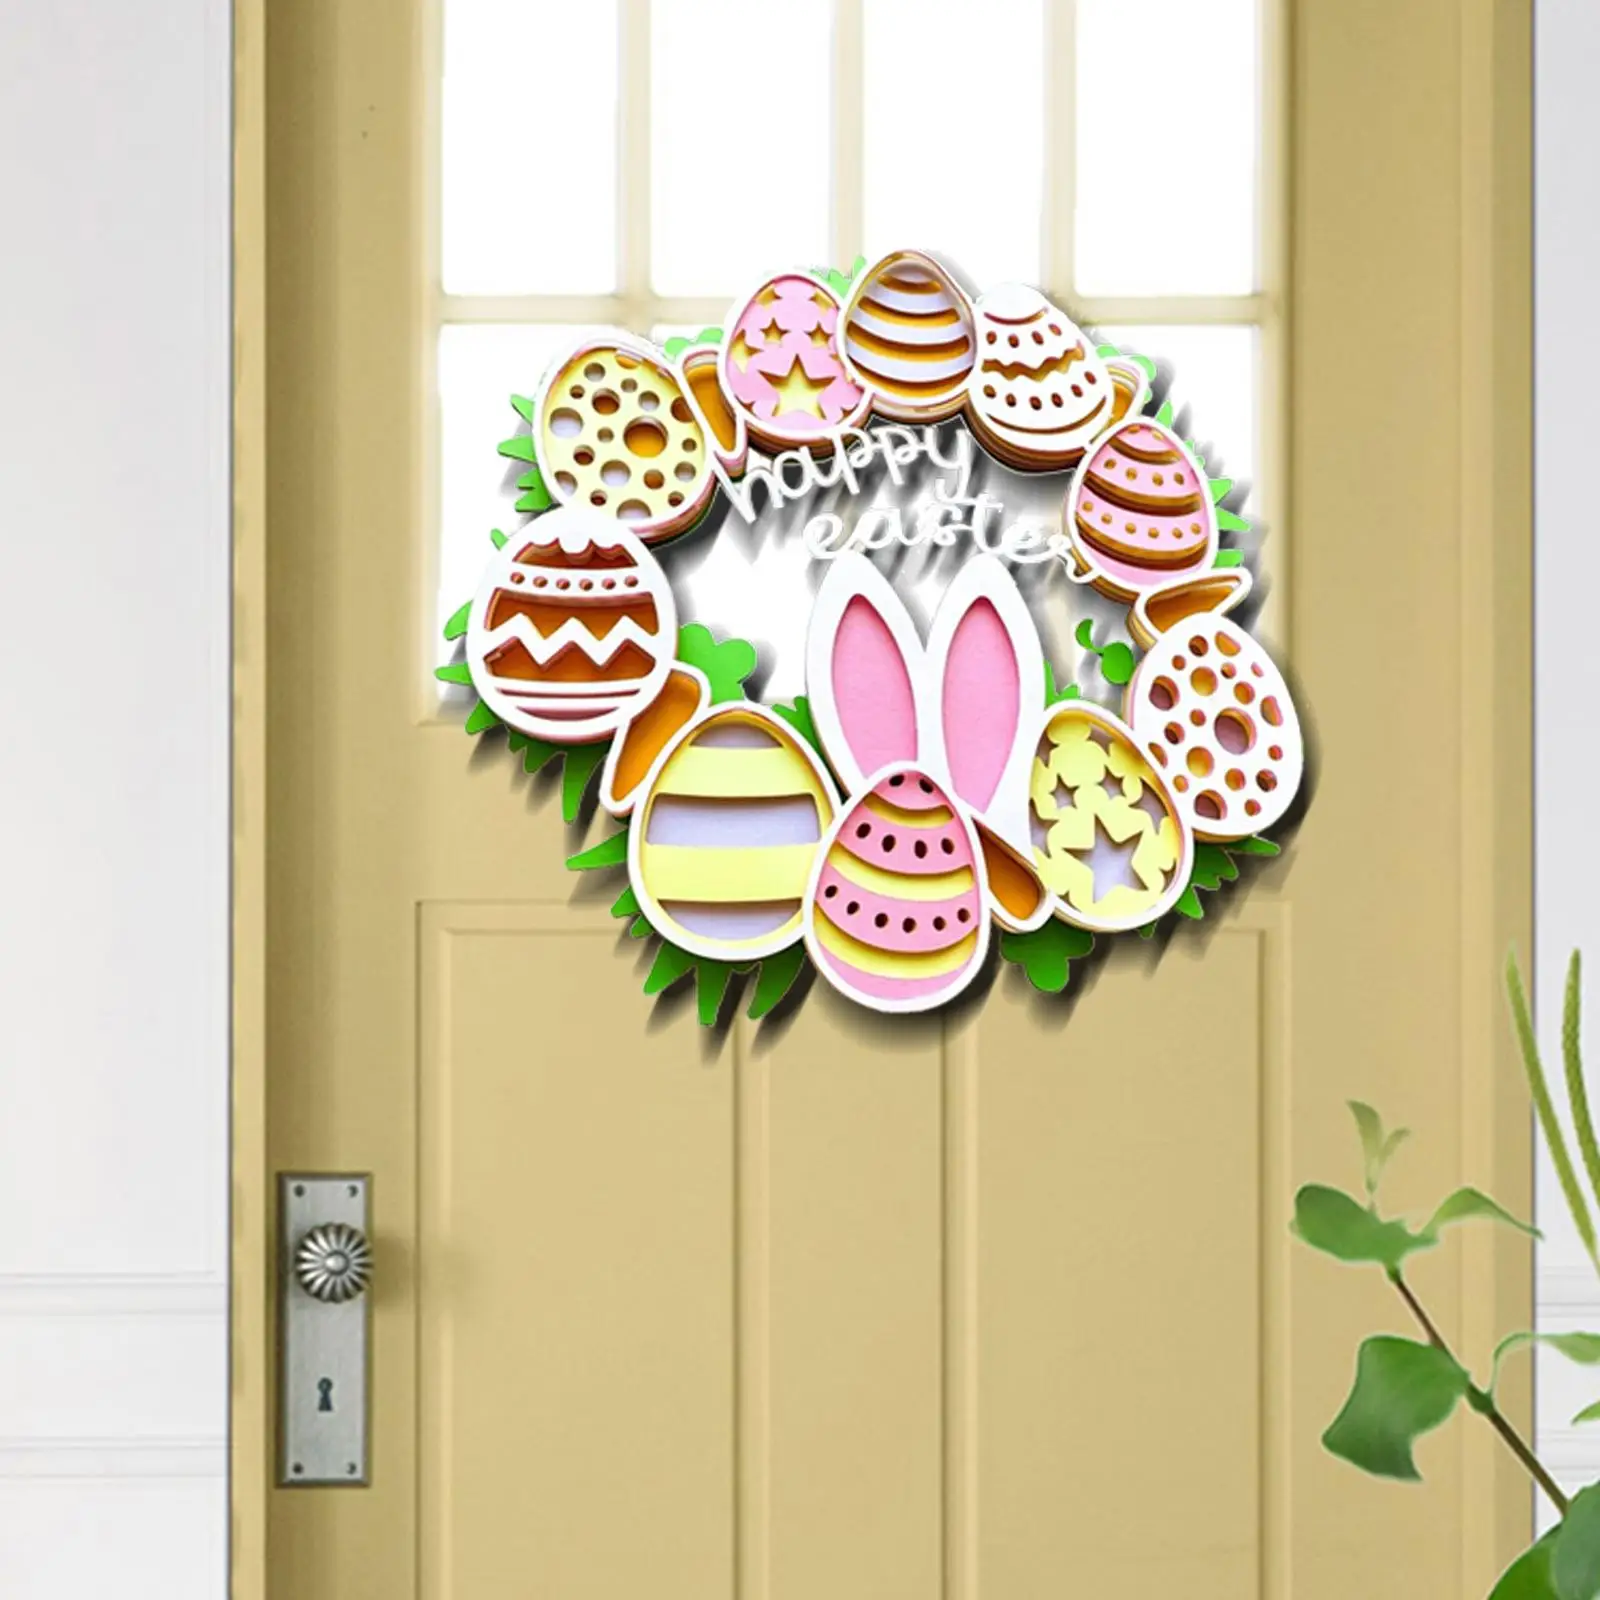 Acrylic Easter Wreath Supplies Party Supplies 5x25cm Home